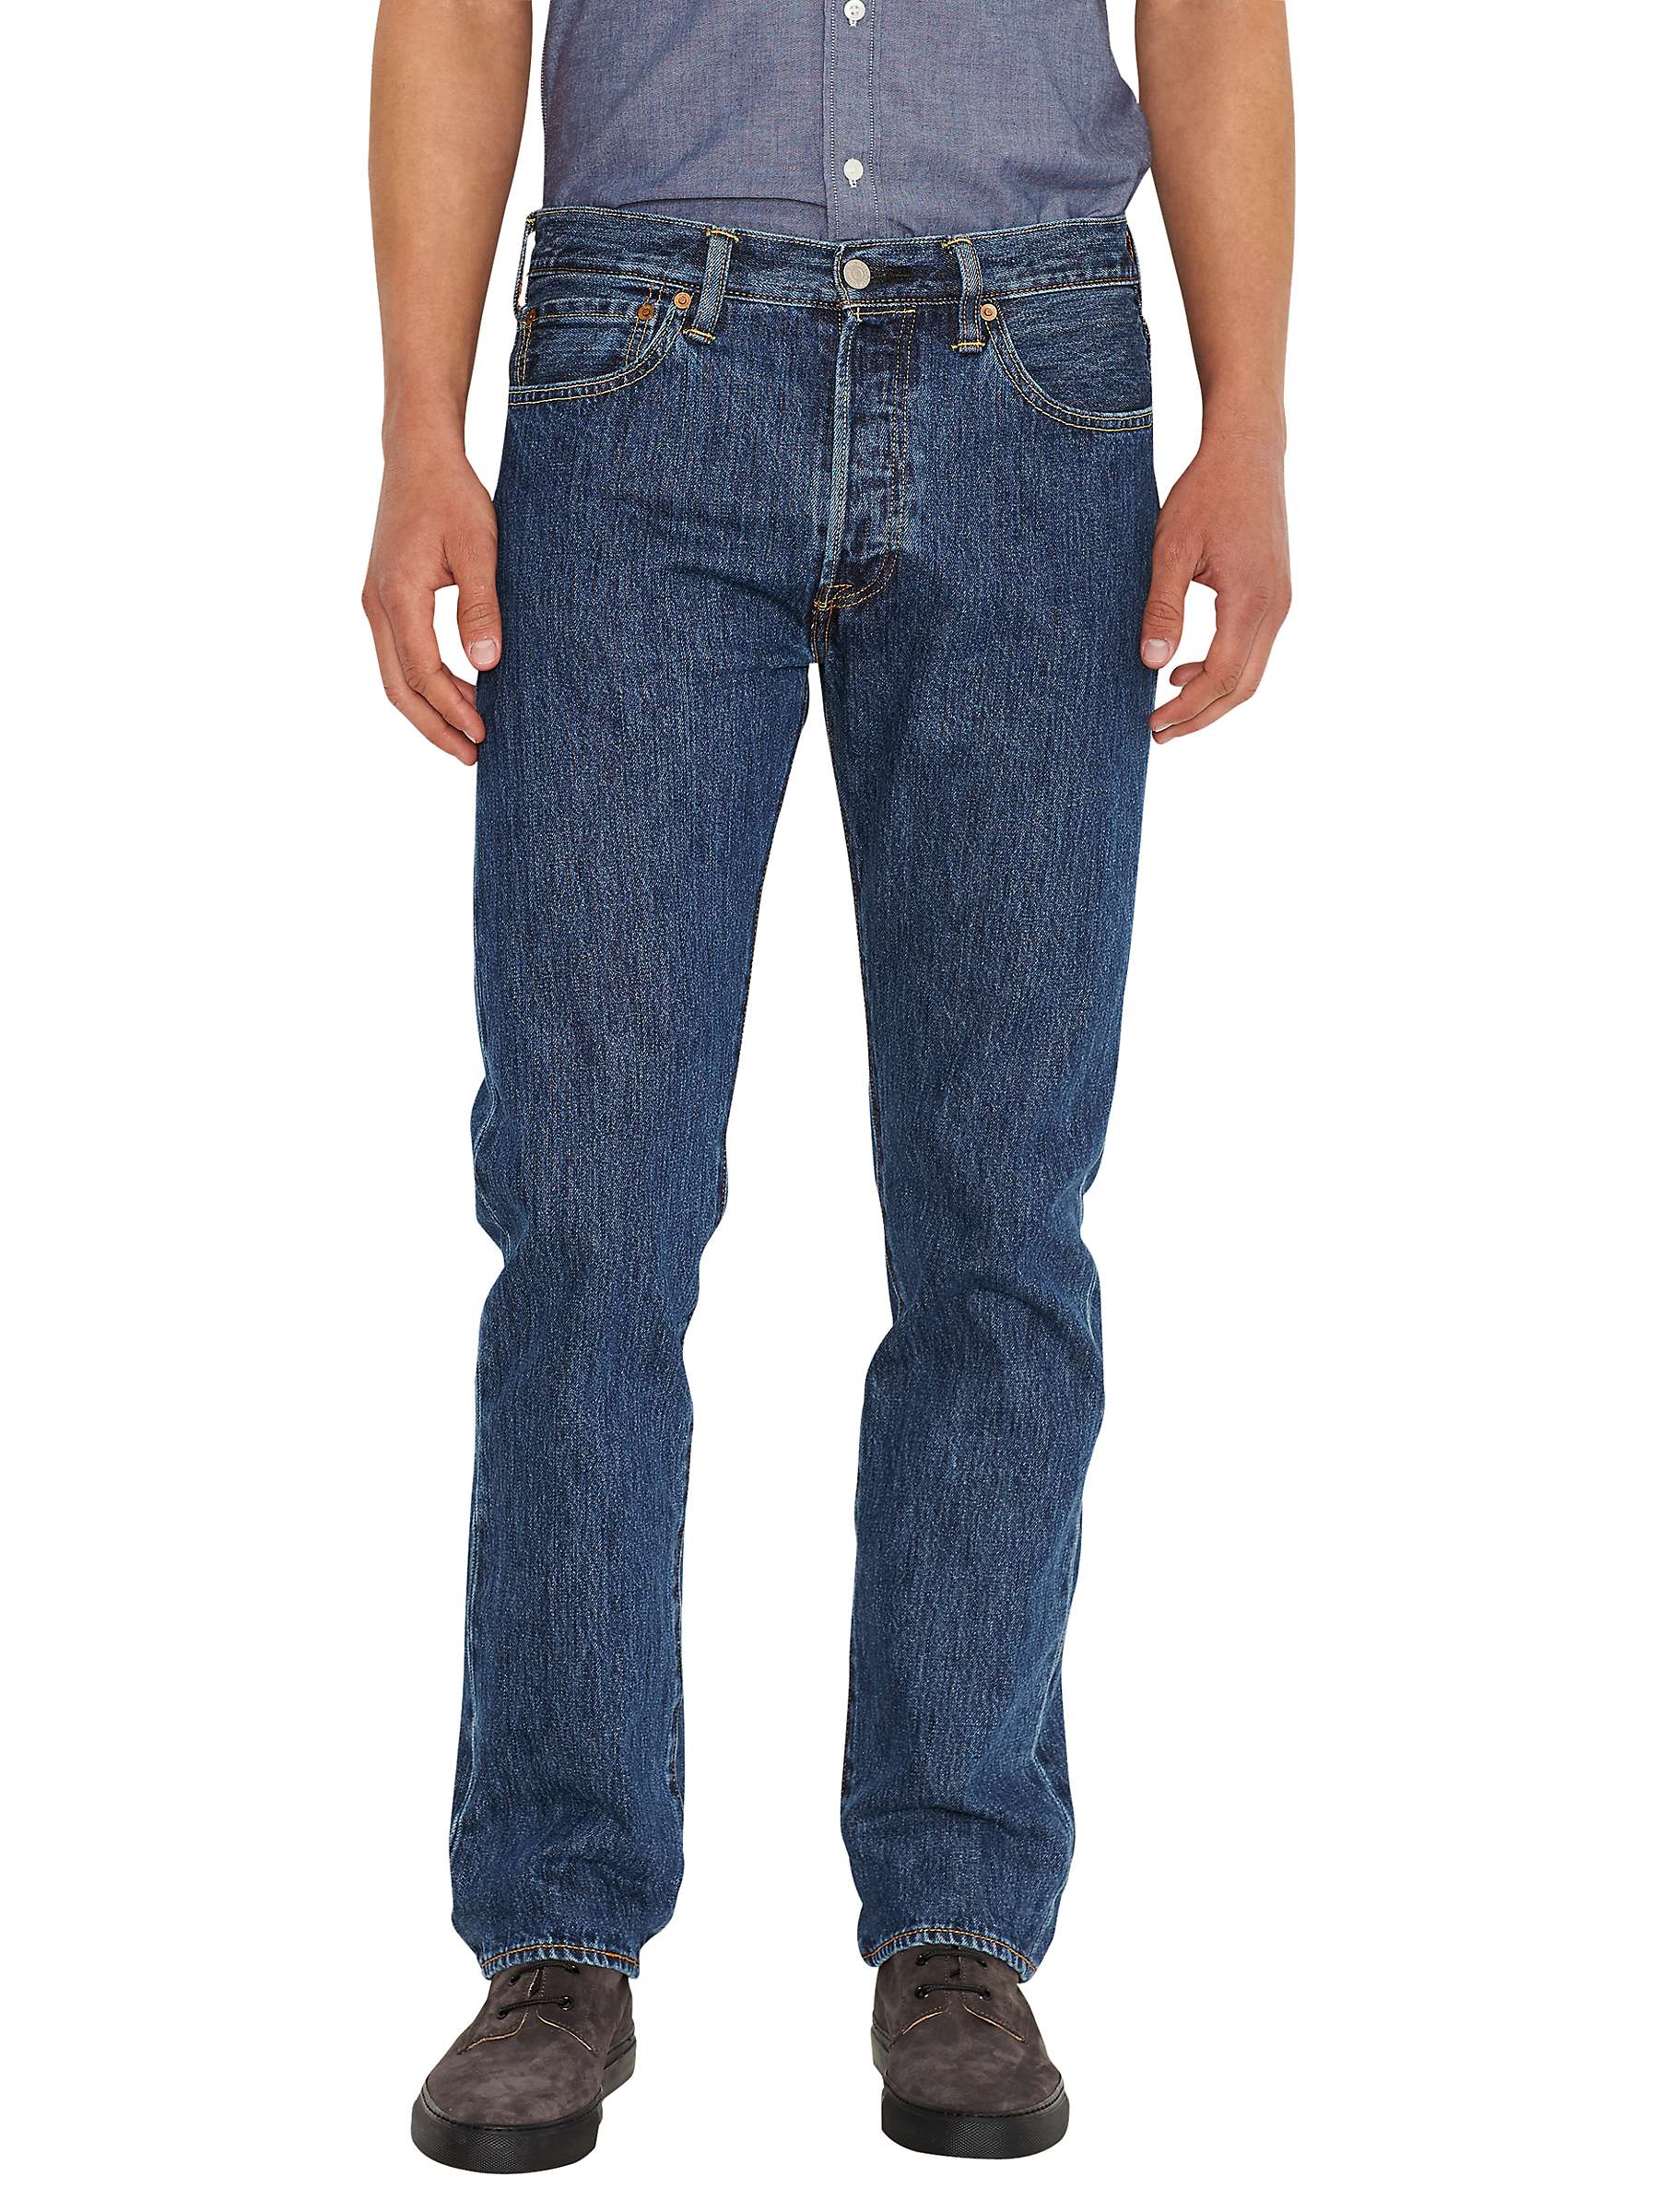 Buy Levi's 501 Original Straight Jeans, Stonewash Online at johnlewis.com